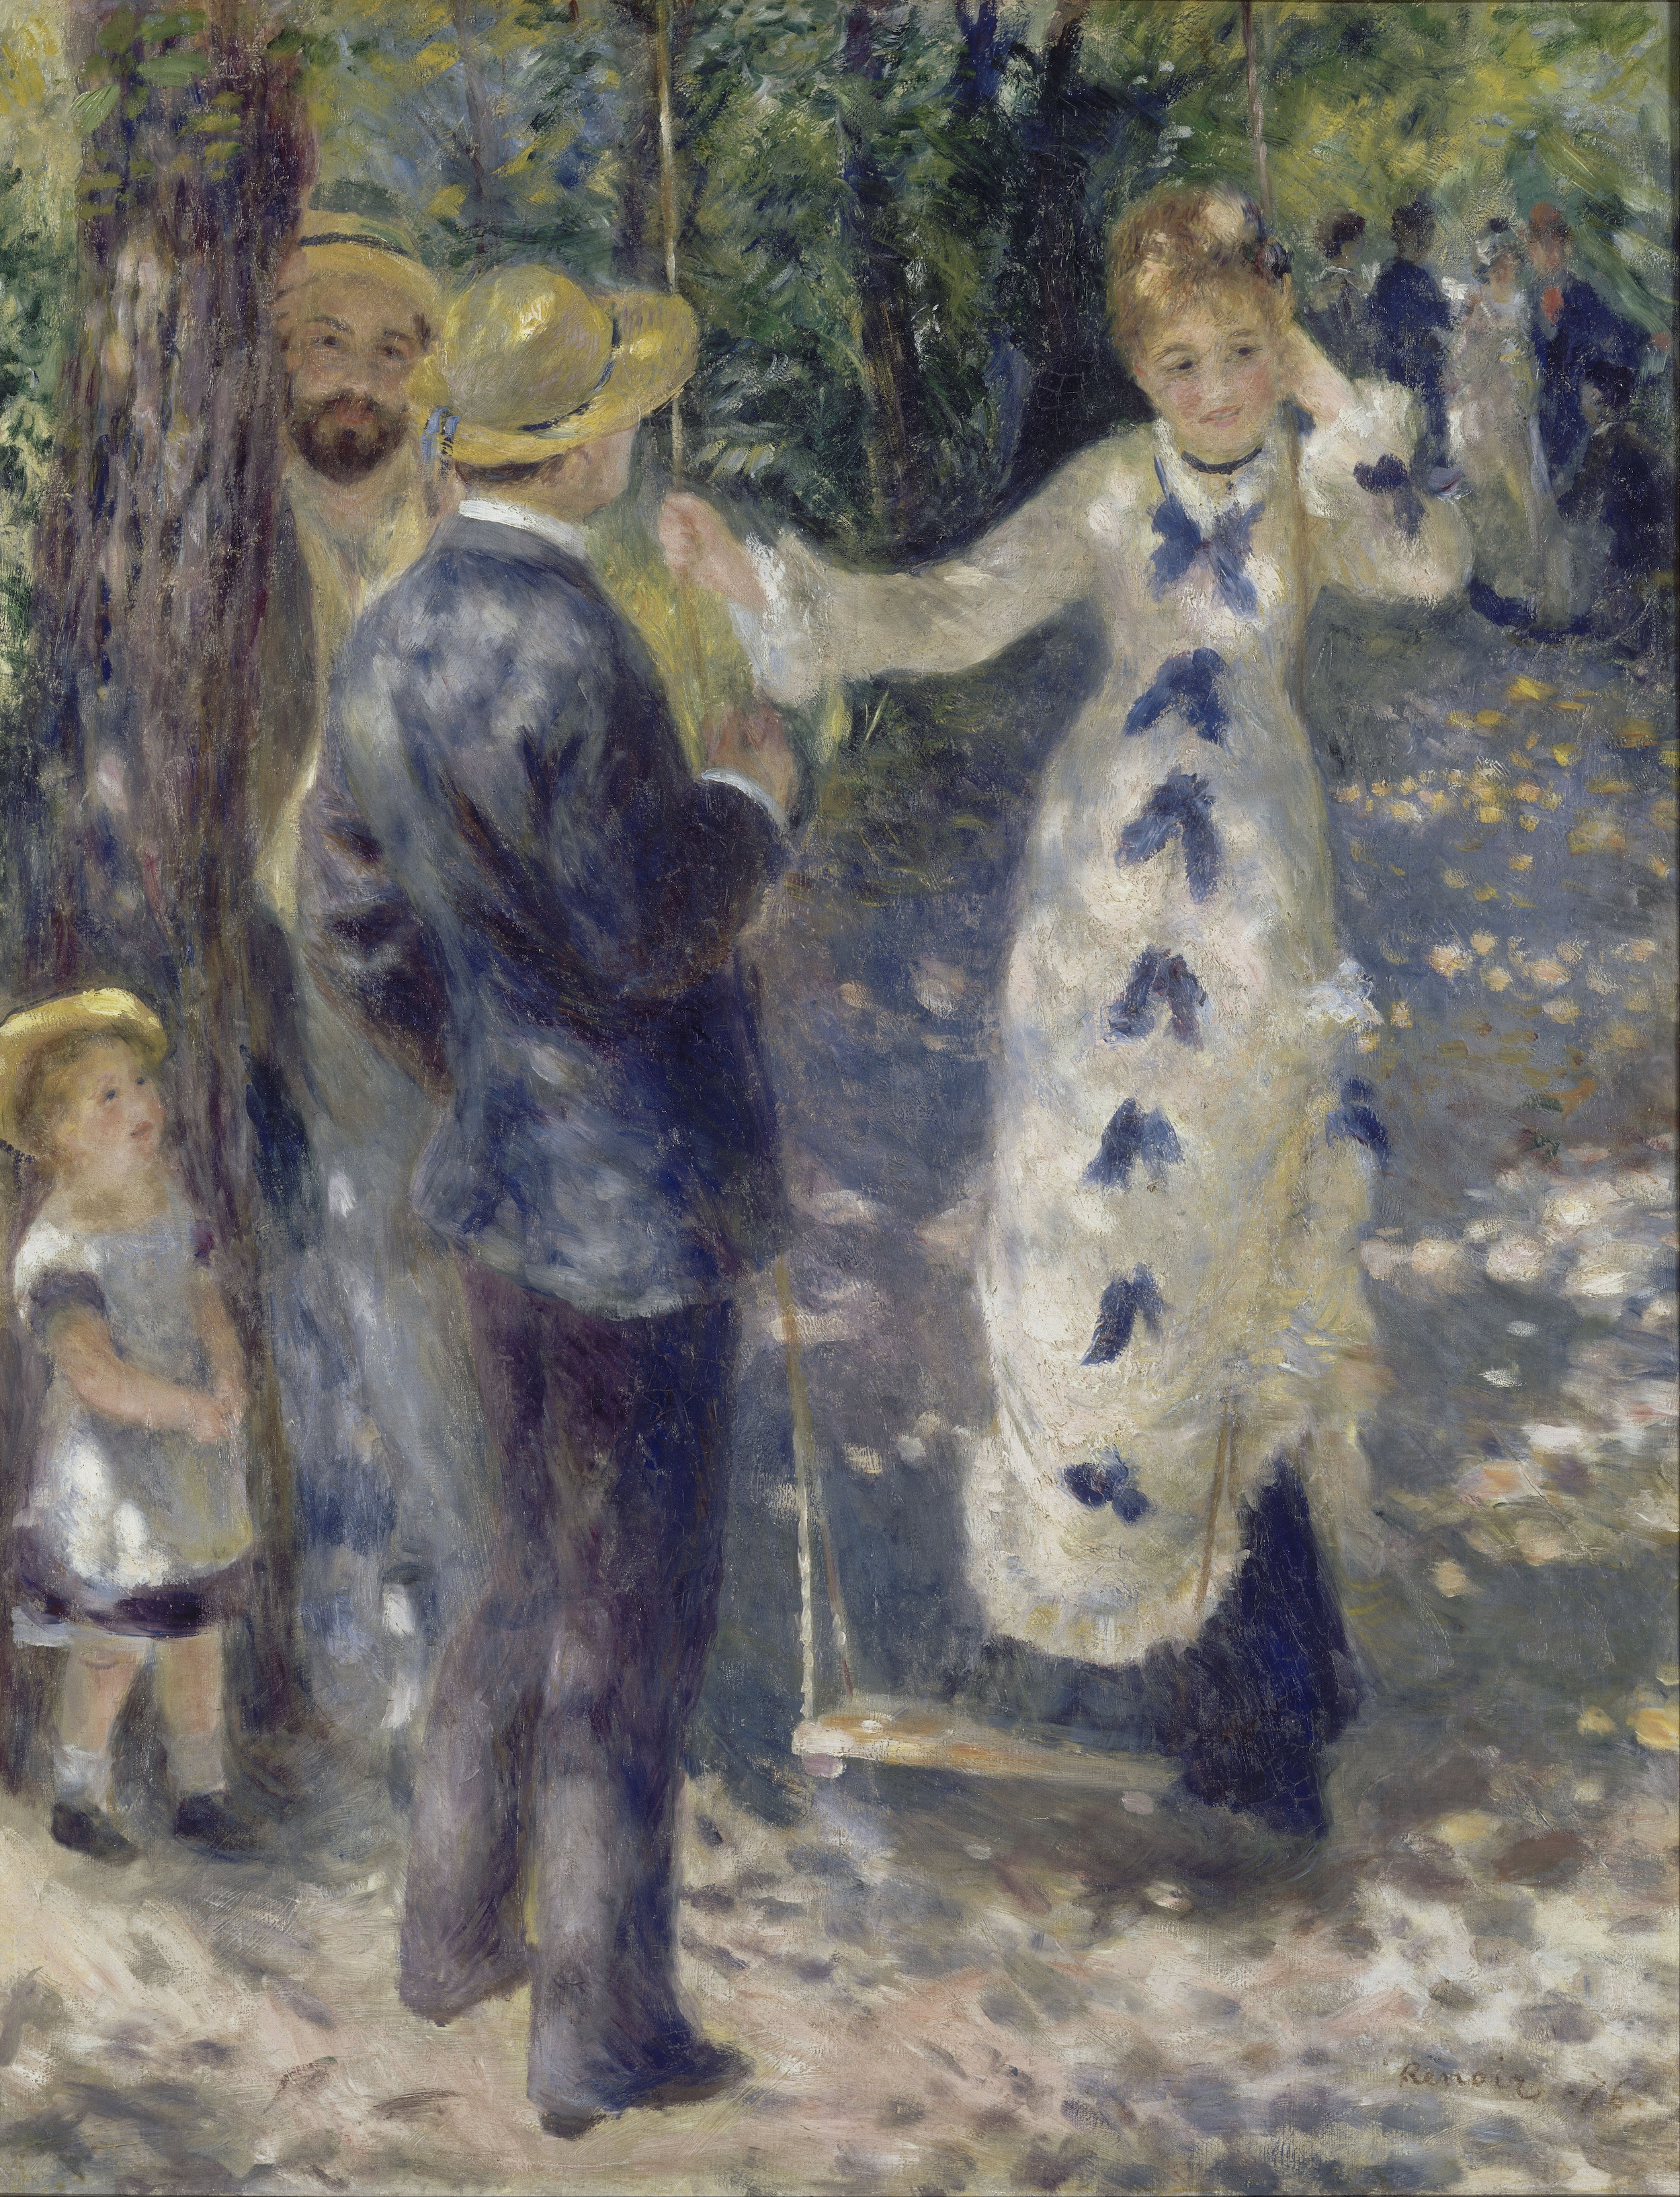 The Swing by Pierre-Auguste Renoir - 1876 - 92 x 73 cm Musée d'Orsay